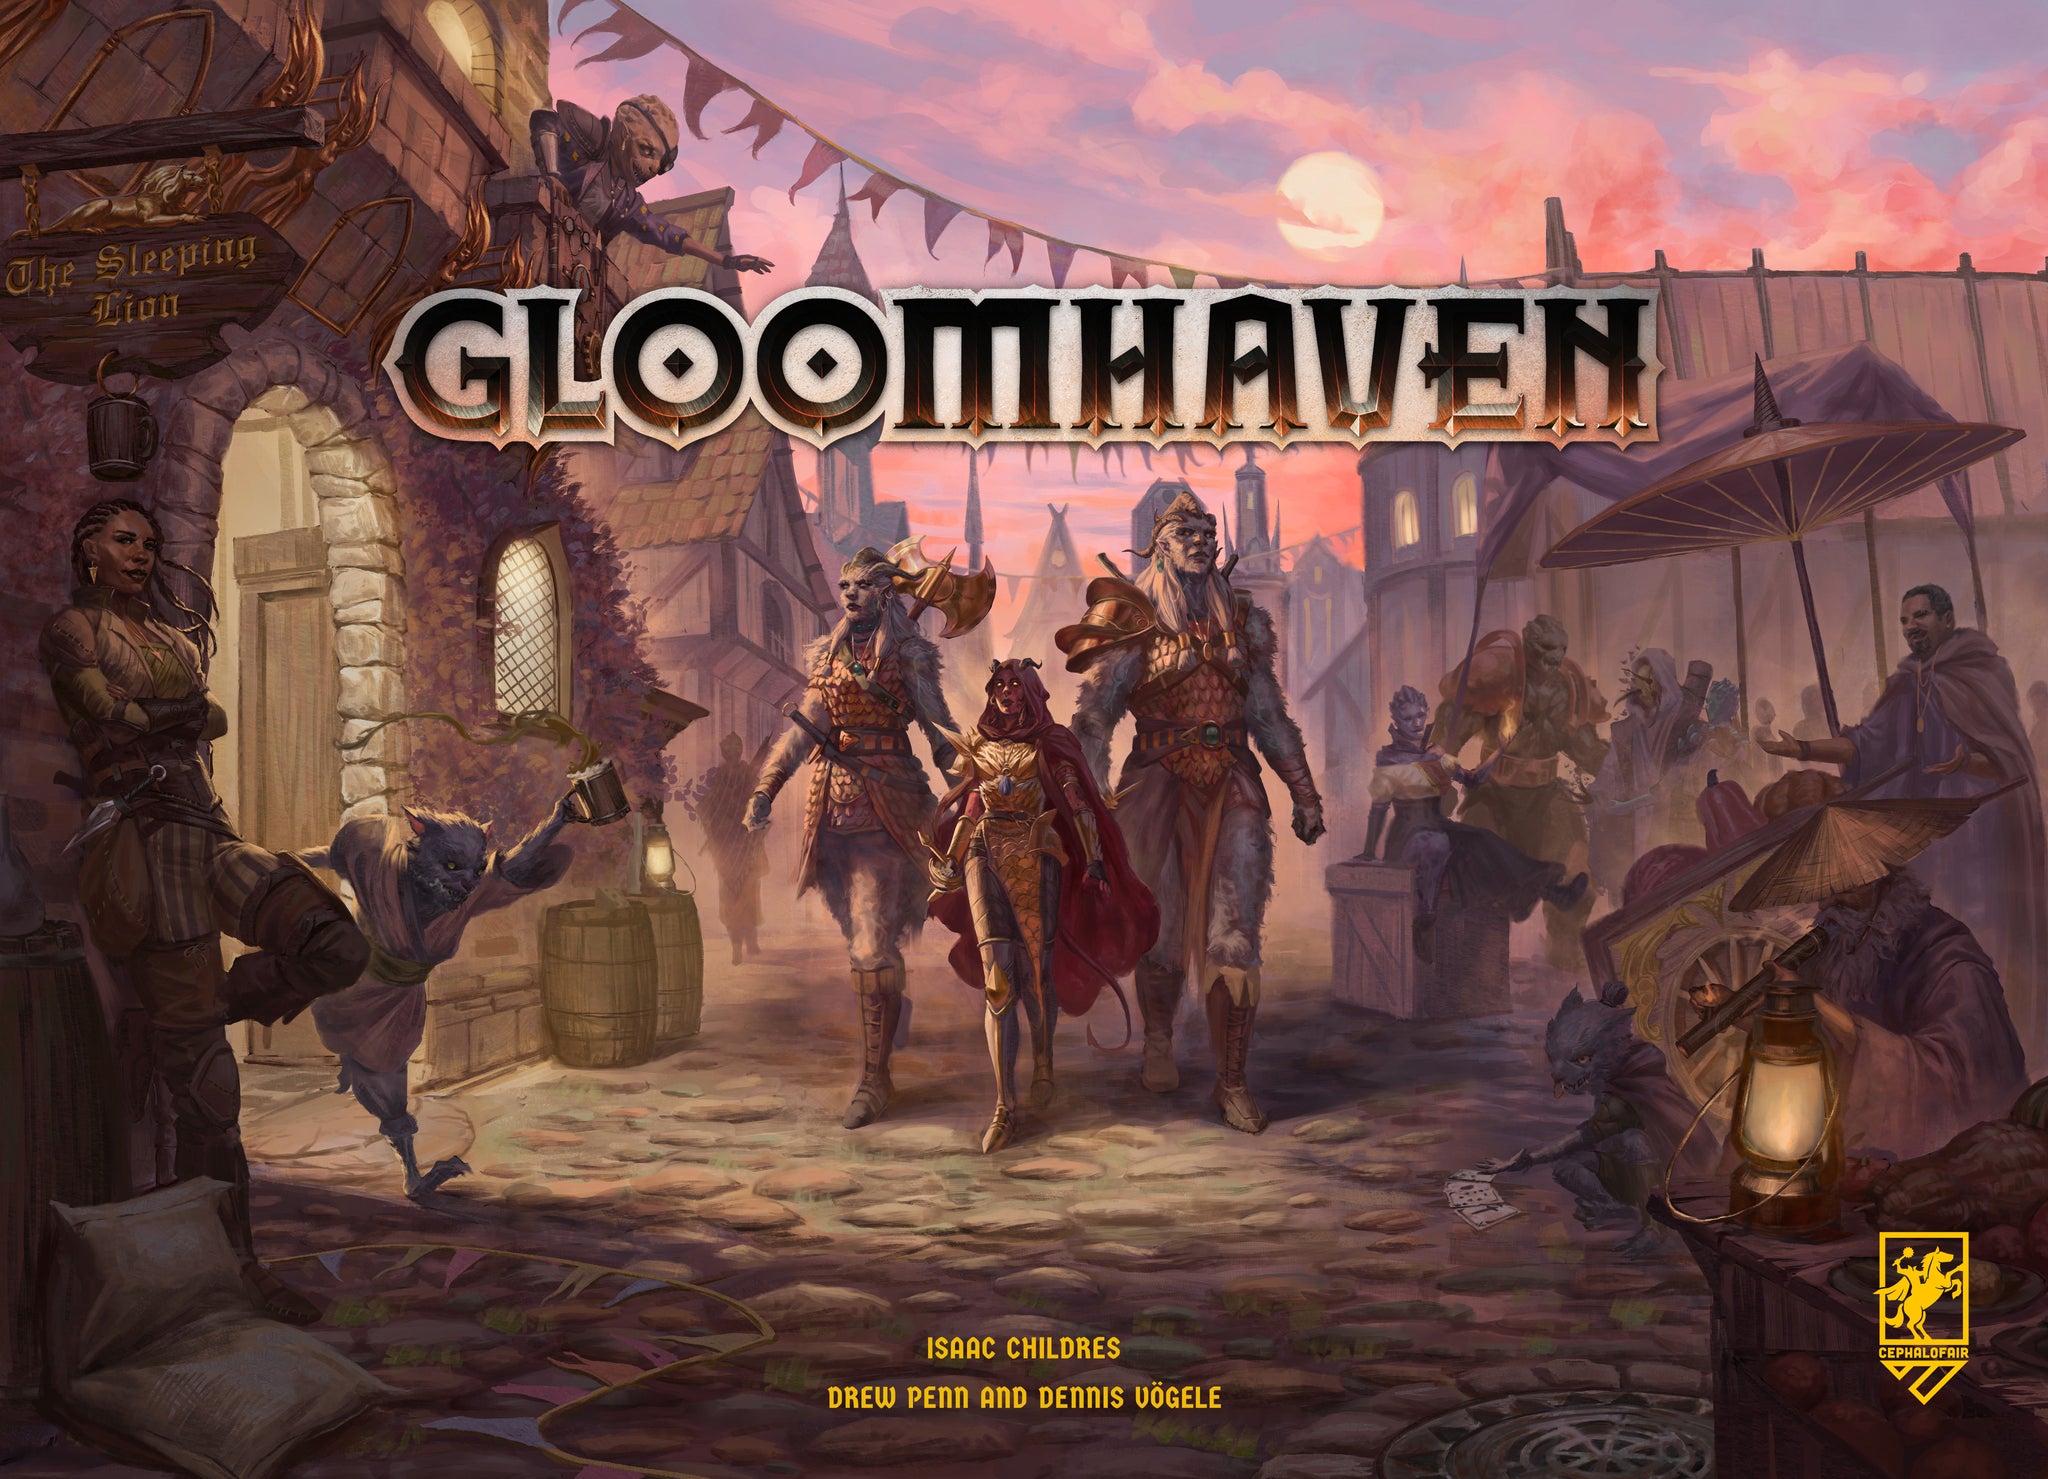 Cephalofair Games announces Gloomhaven: Second Edition